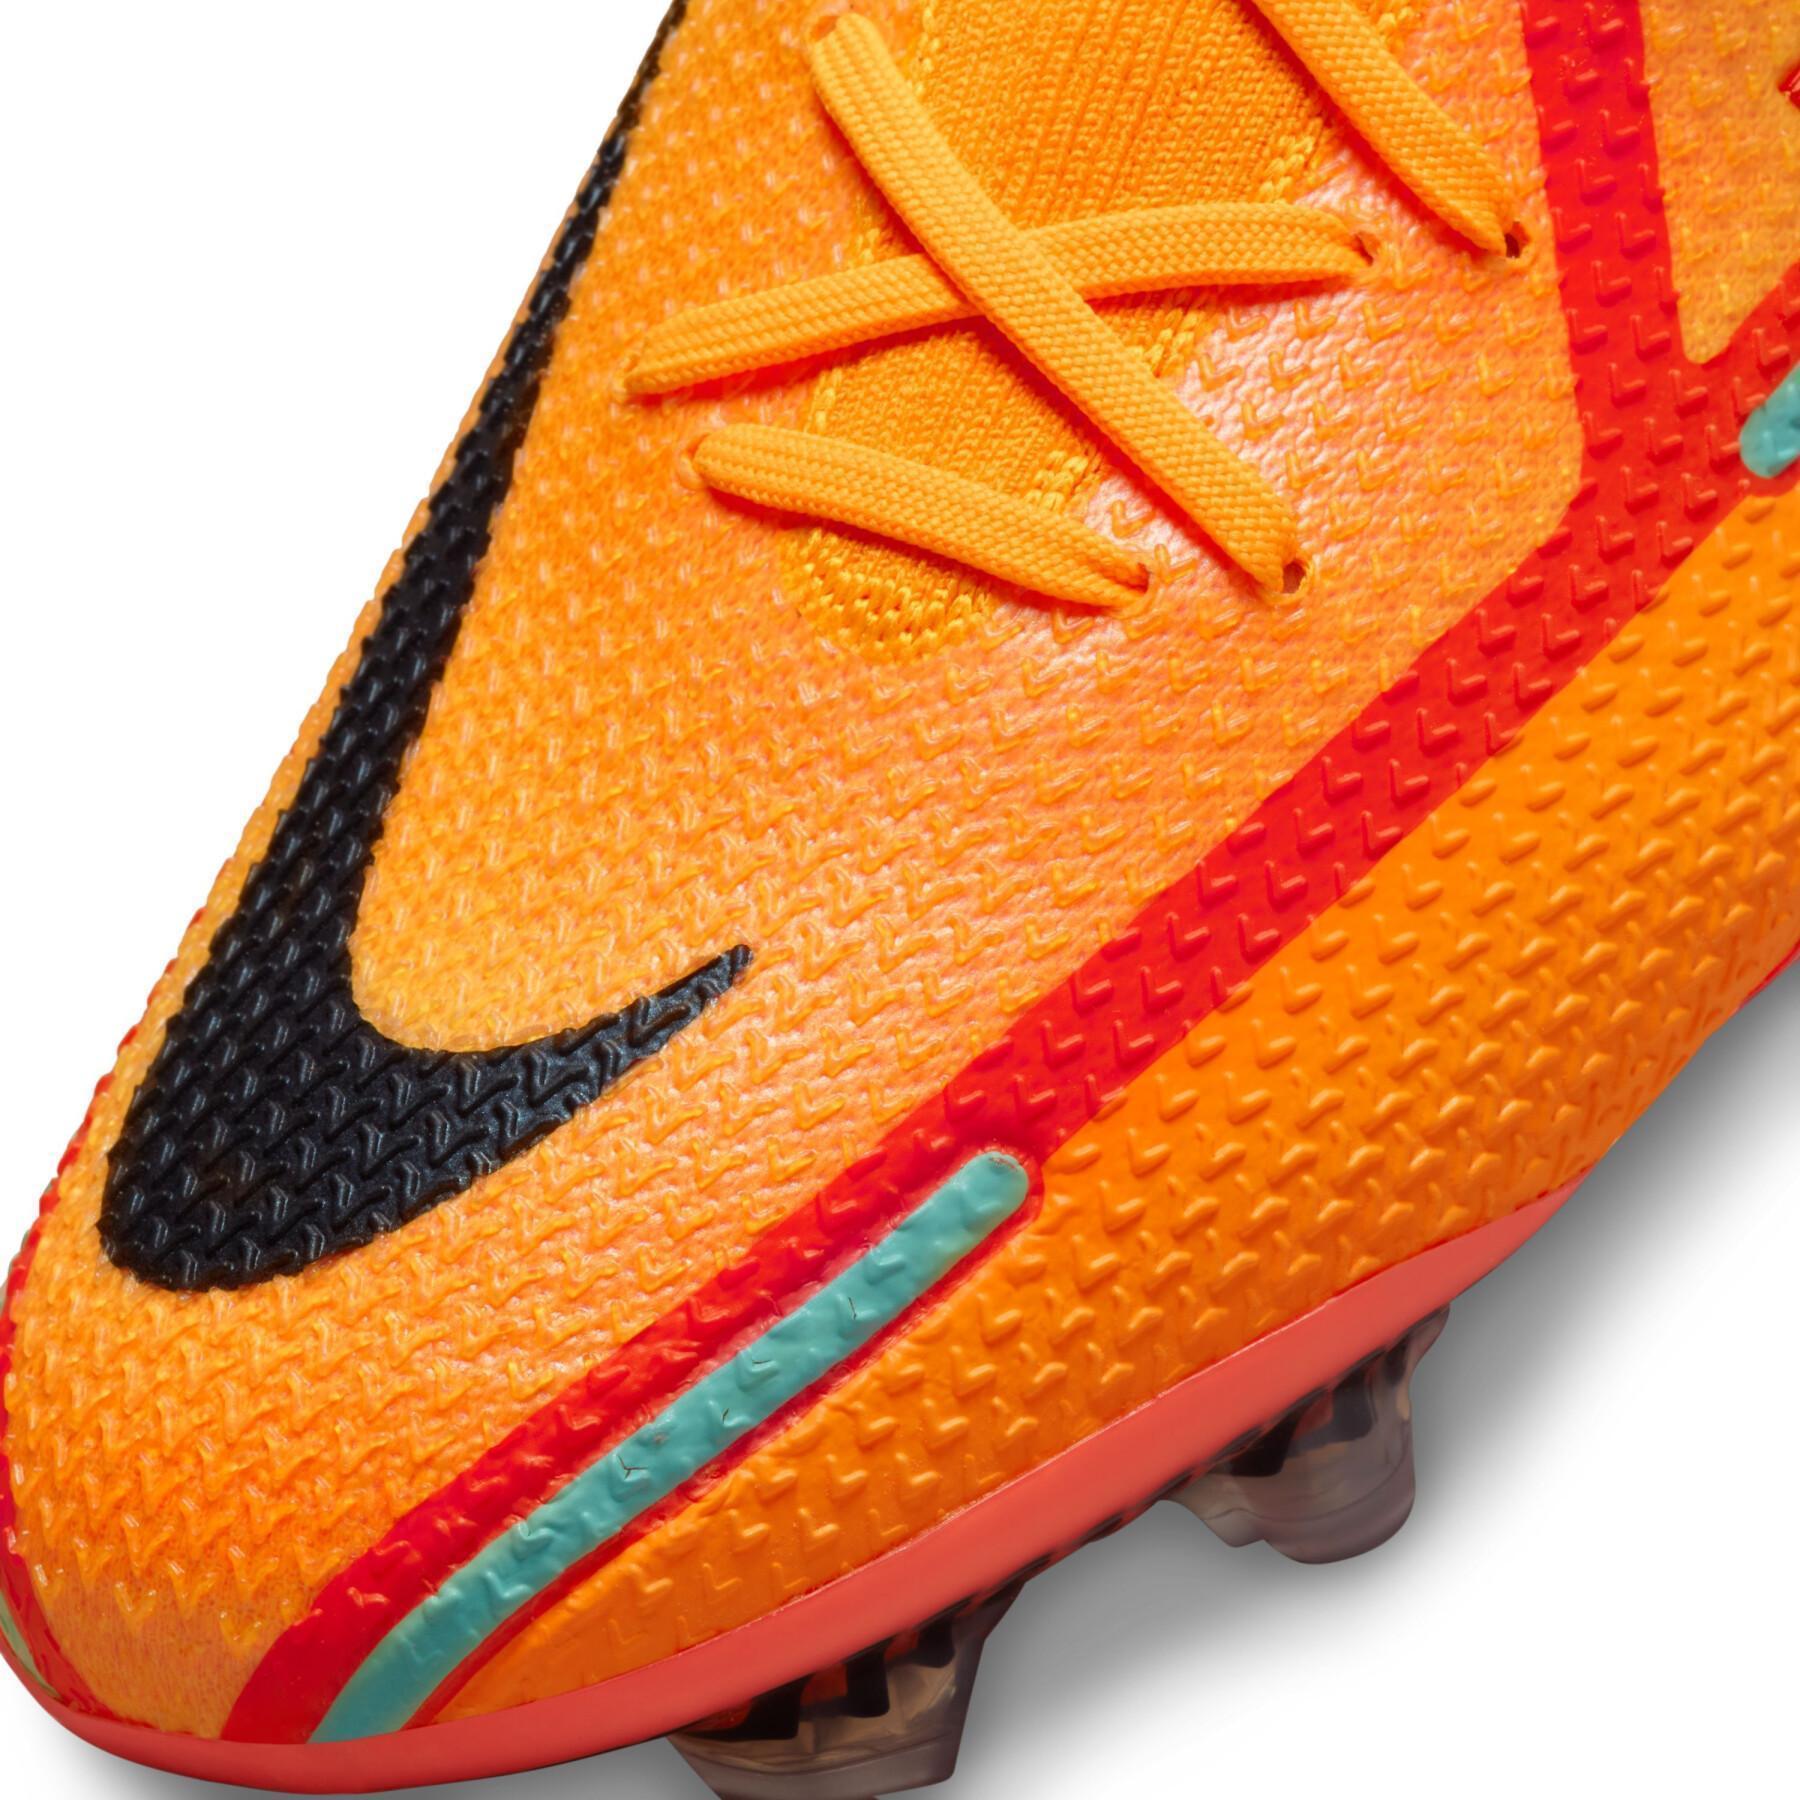 Soccer shoes Nike Phantom GT2 Élite FG